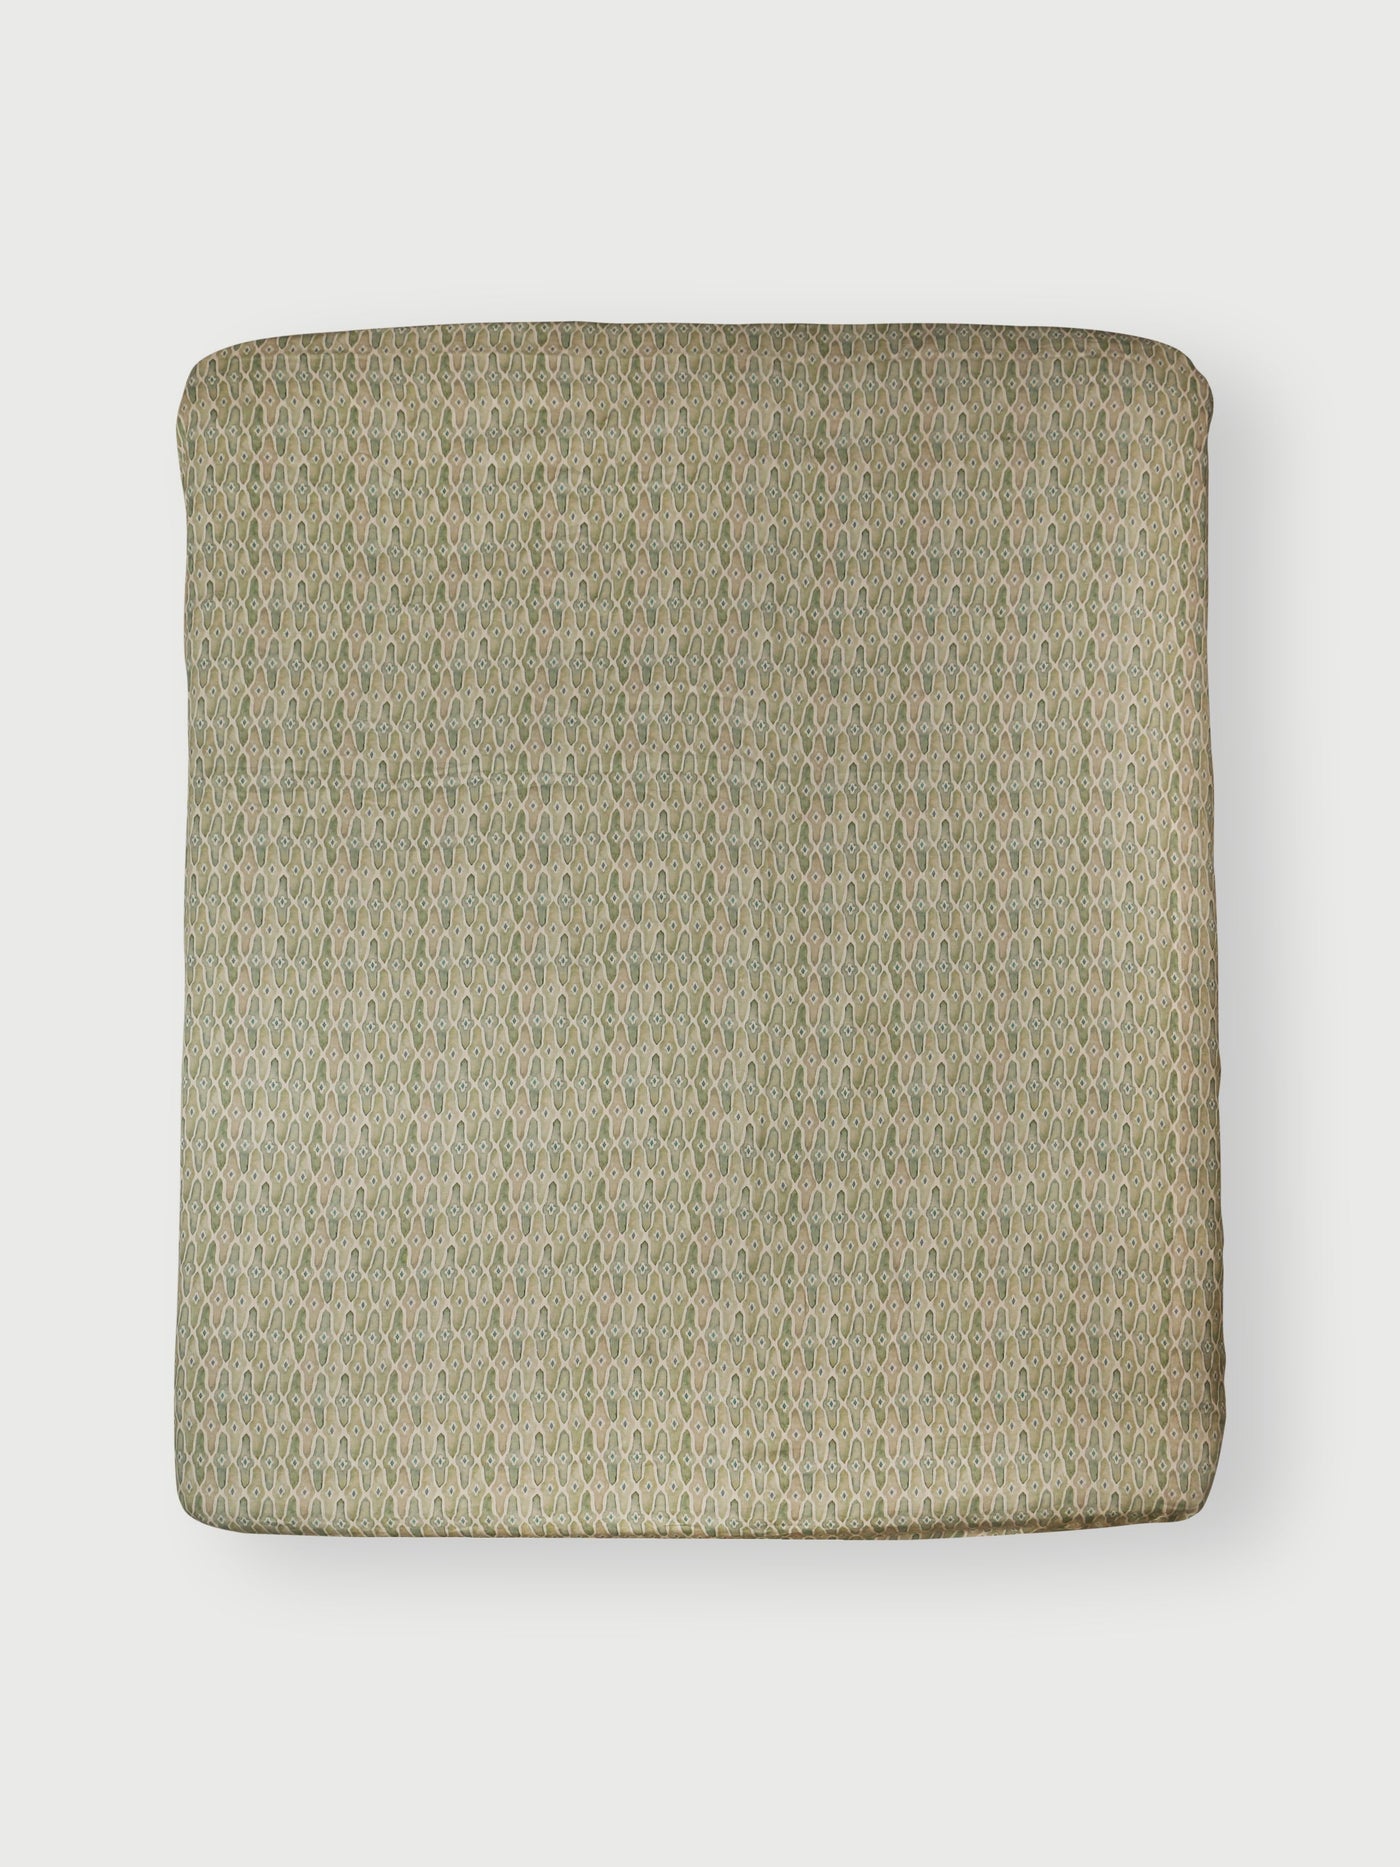 Bedcover - Mosaic Sage Linen